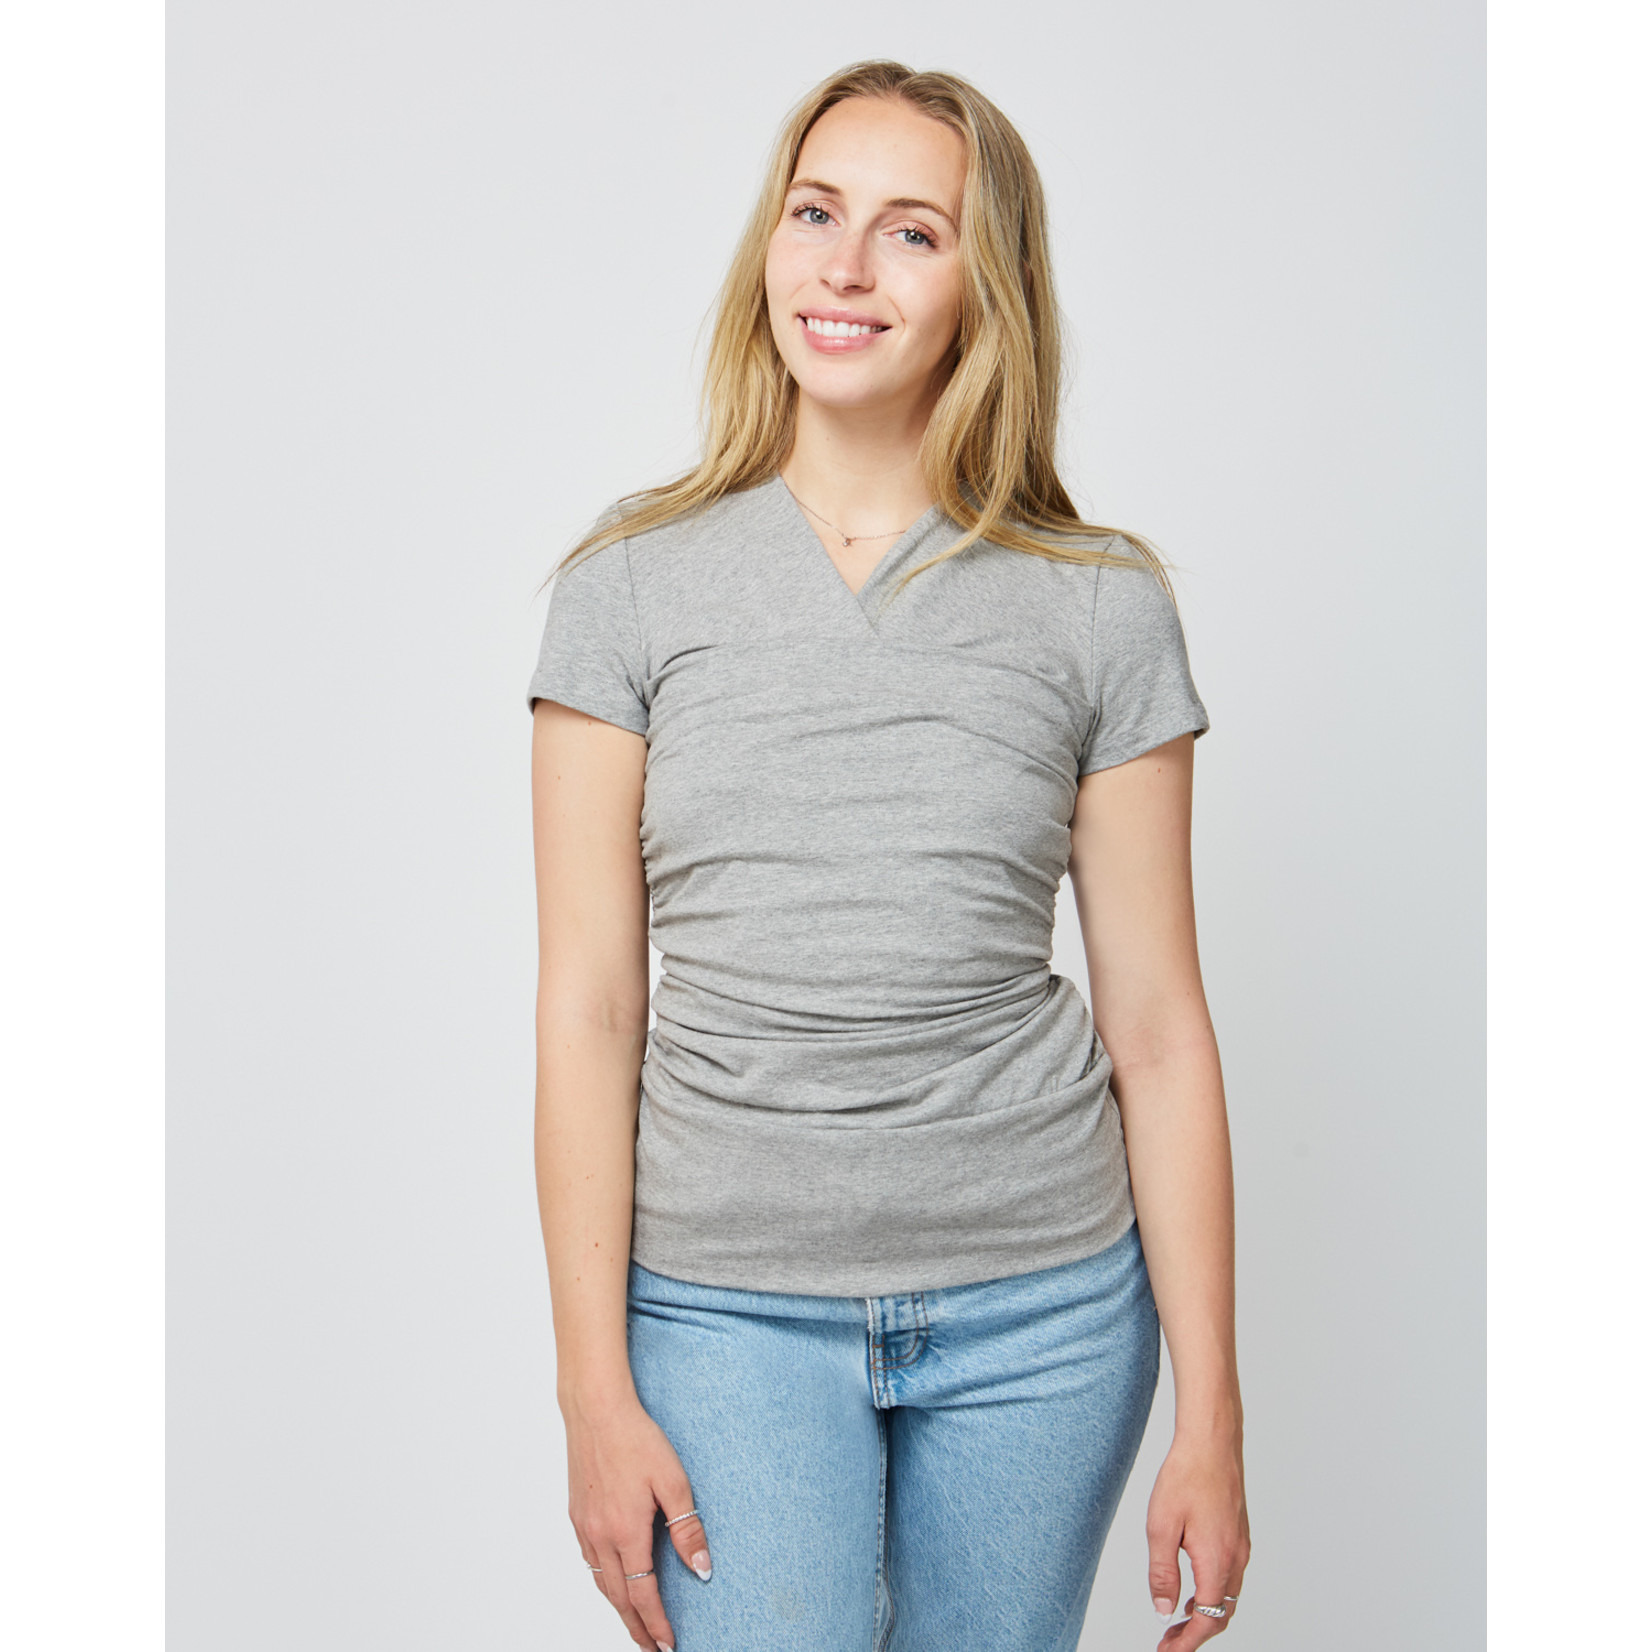 Umana Skin-to-Skin T-shirt for Mom